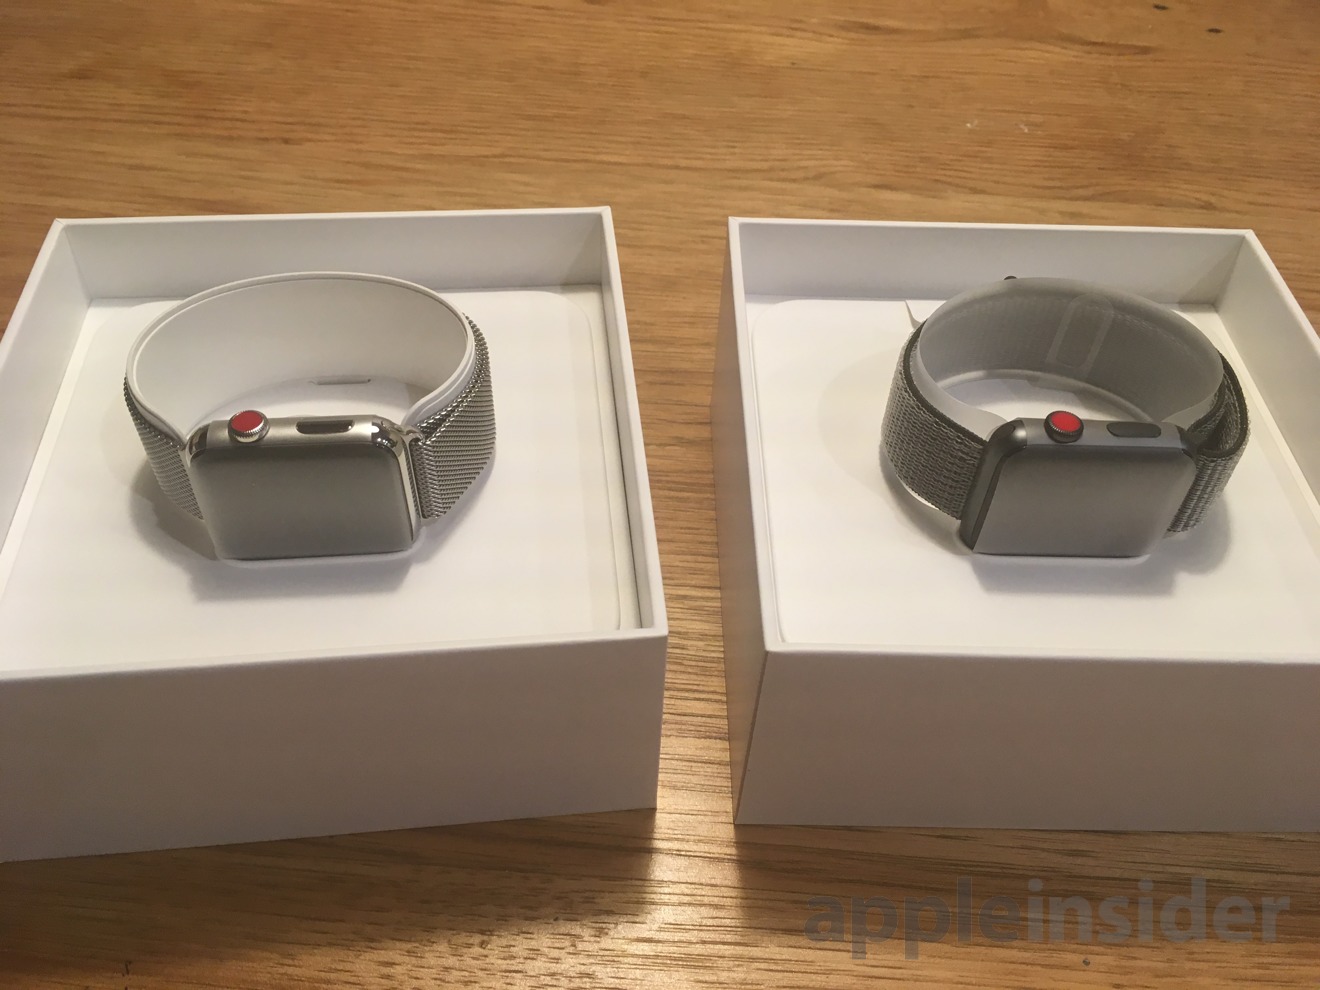 stainless steel apple watch vs aluminum